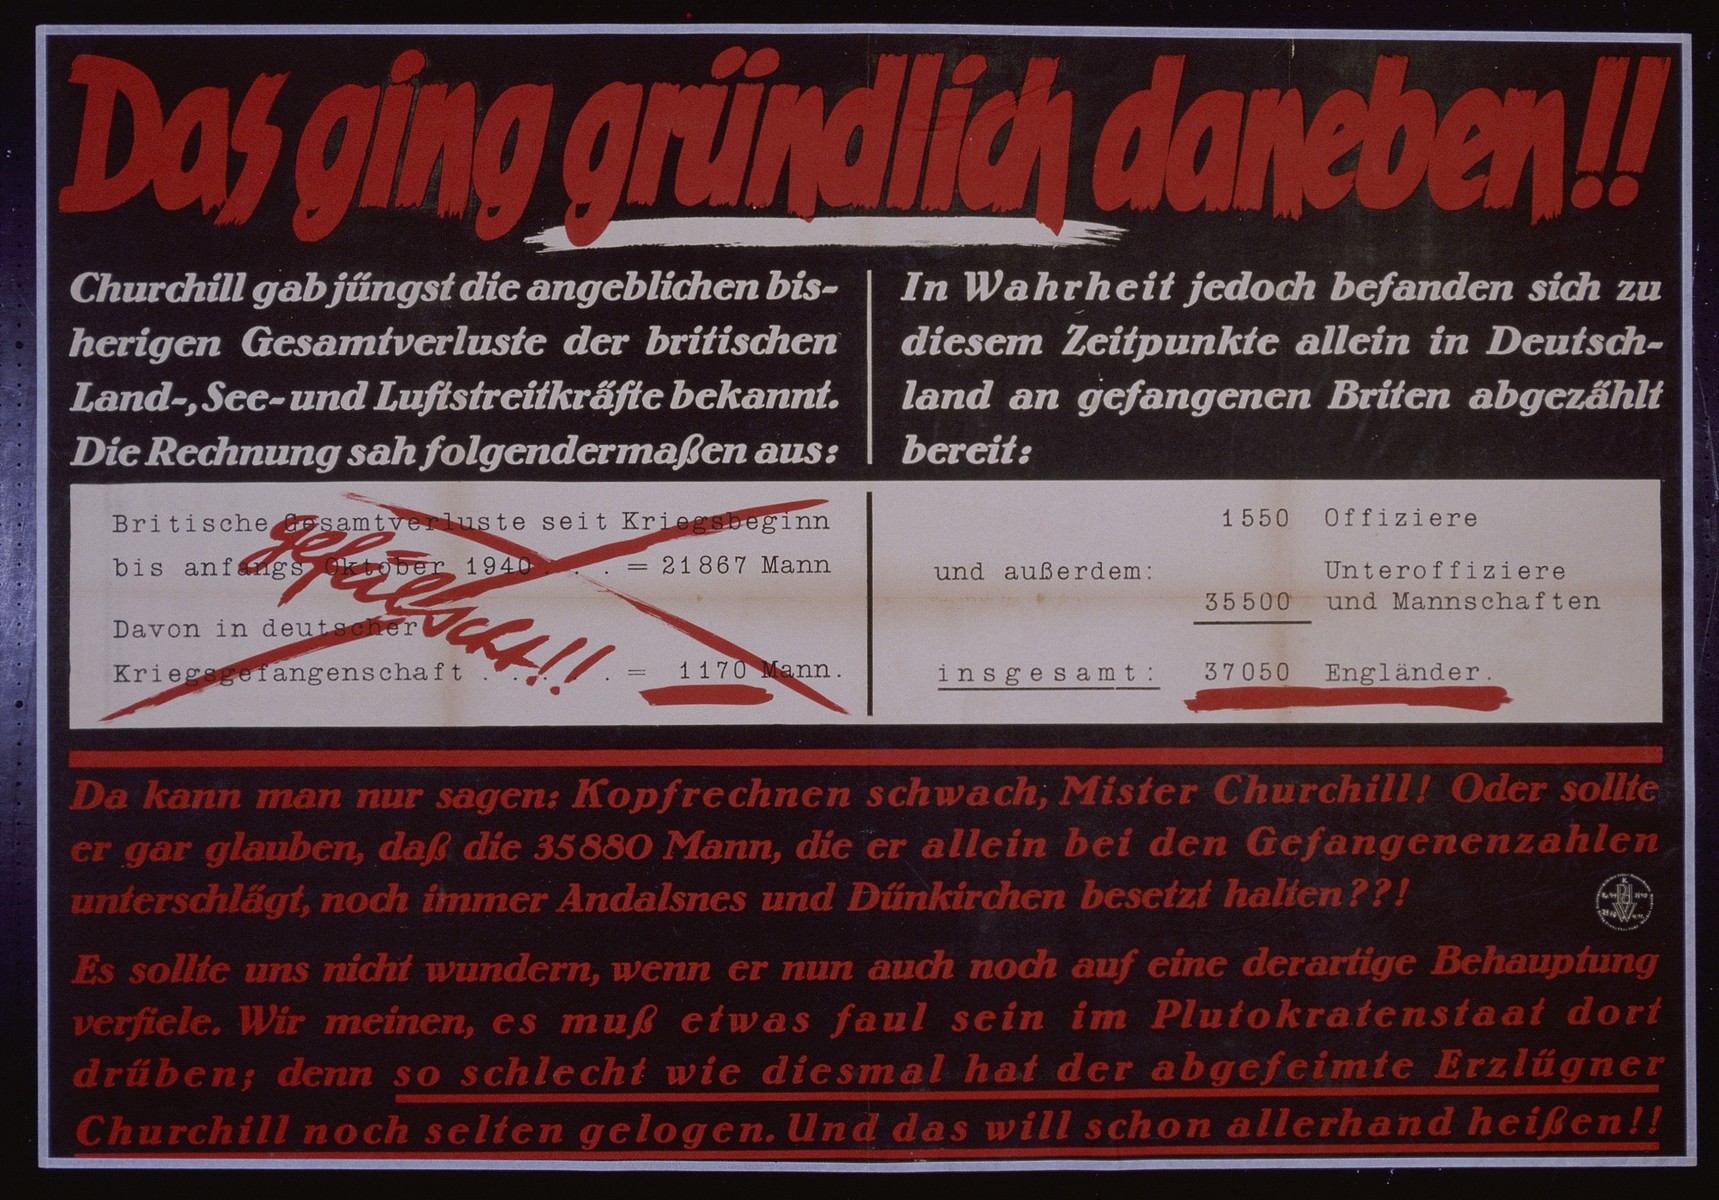 Nazi propaganda poster entitled, "Das ging grundlich daneben," issued by the "Parole der Woche," a wall newspaper (Wandzeitung) published by the National Socialist Party propaganda office in Munich.